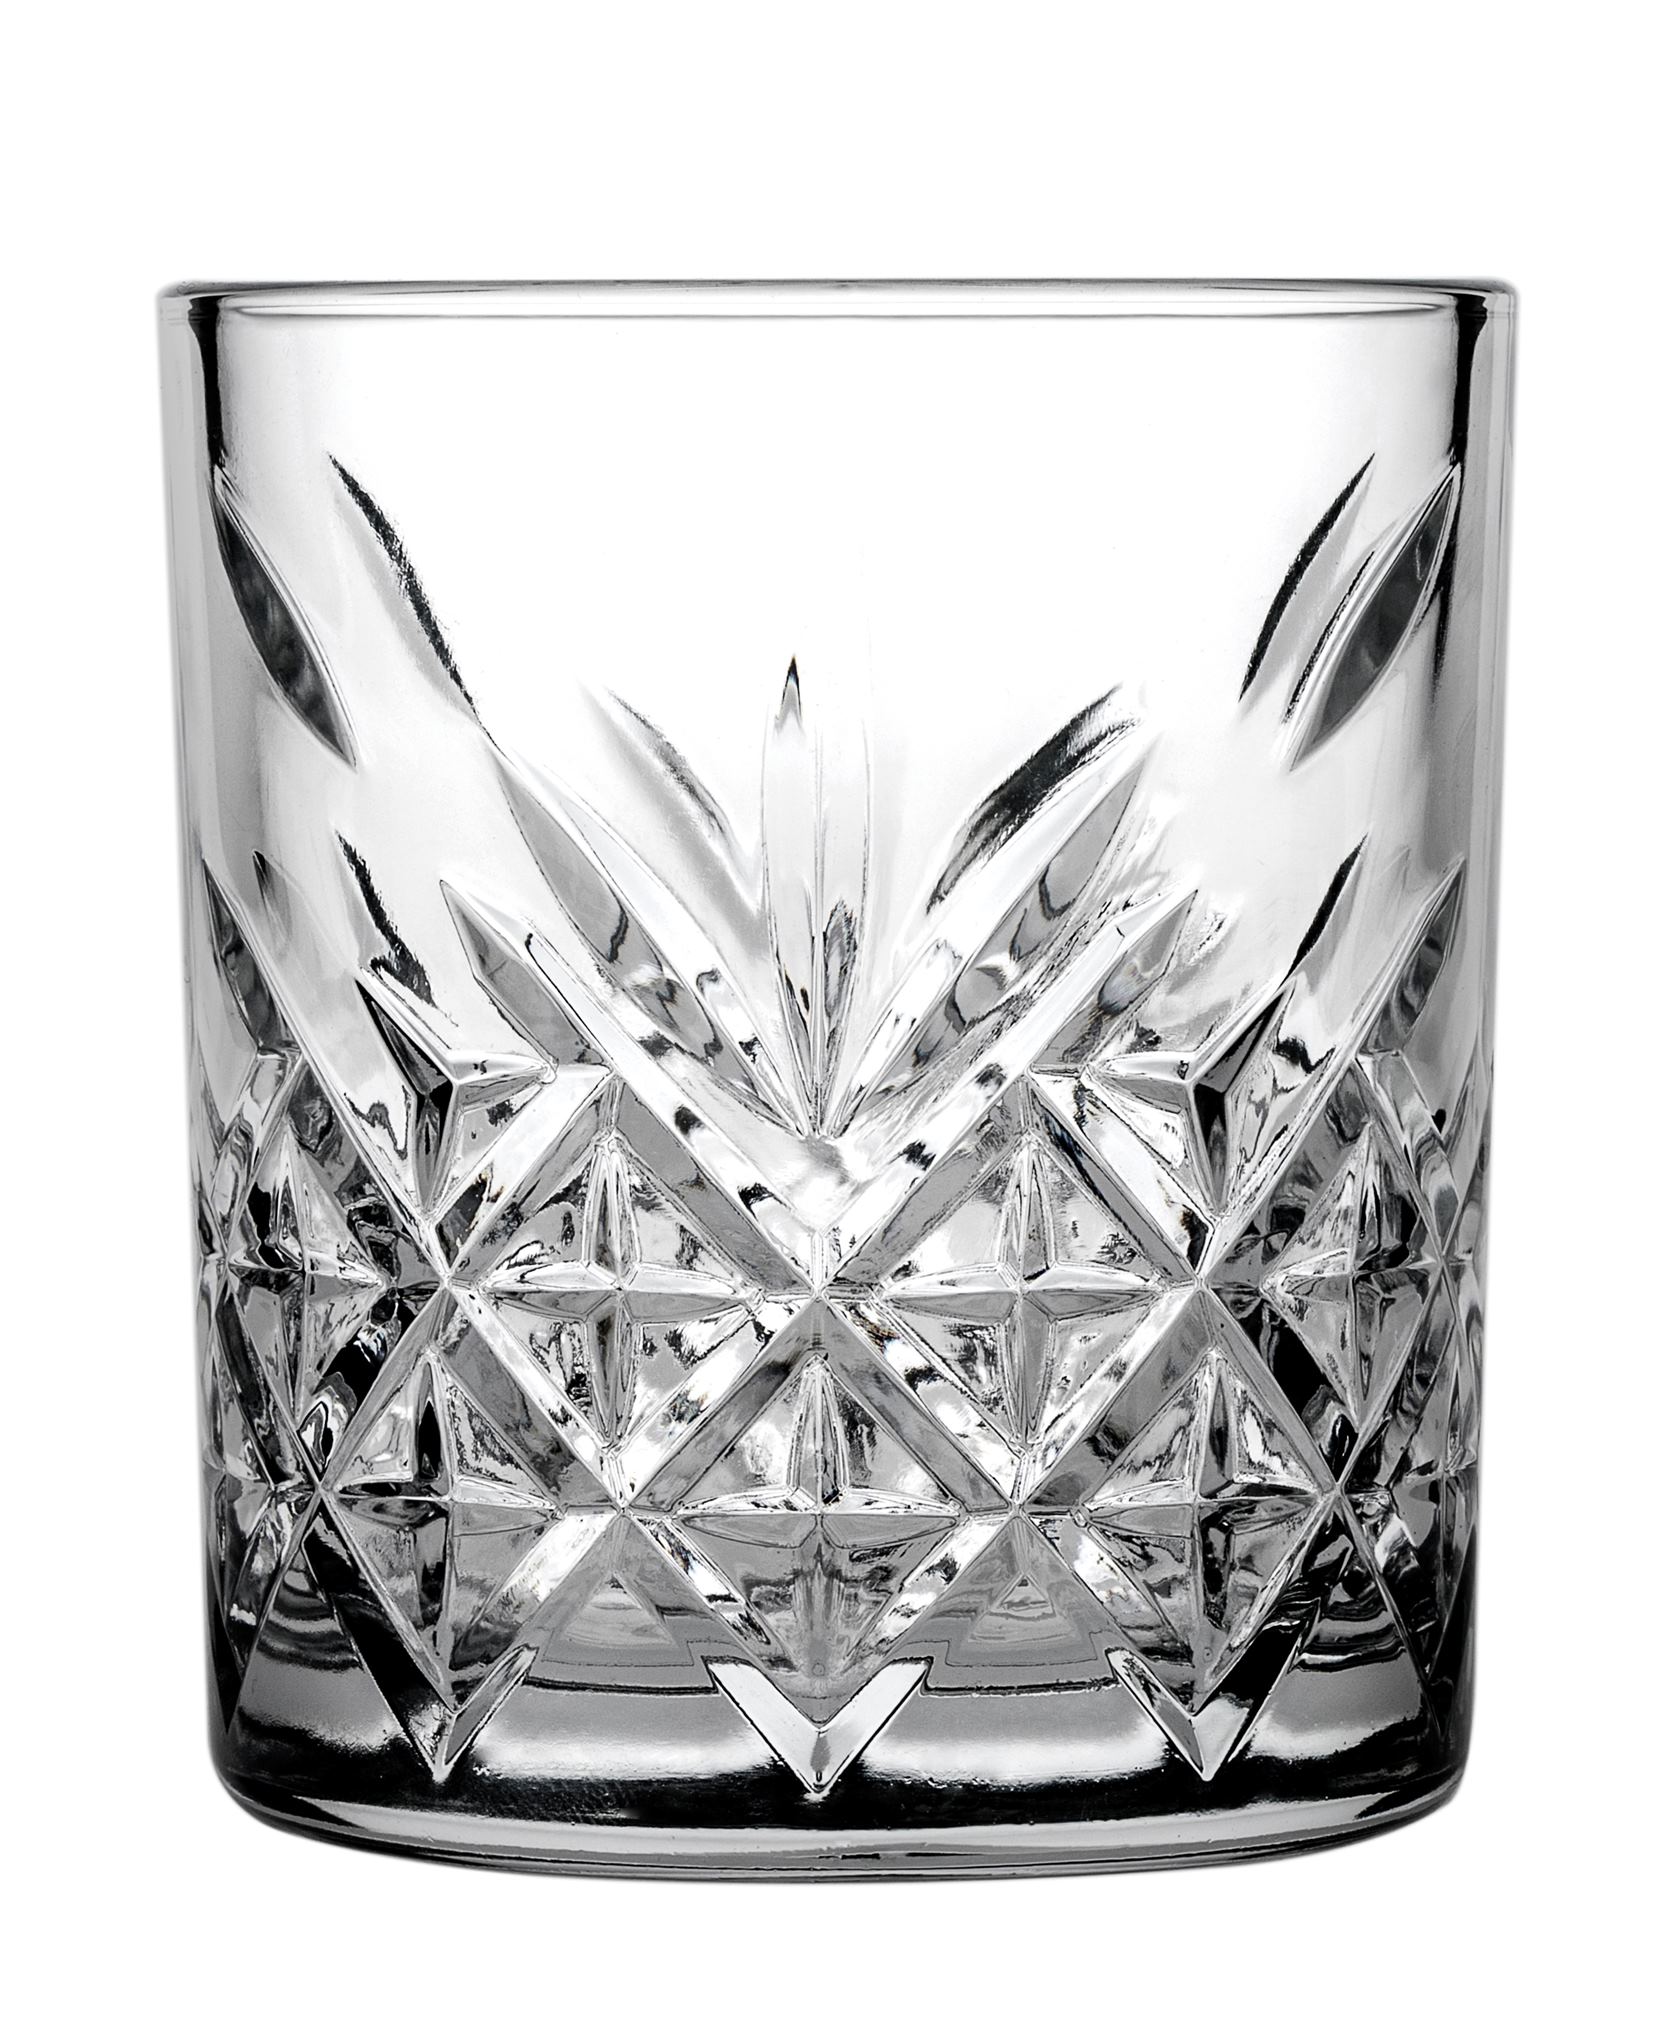 Whiskyglas Timeless, 0,205 ltr., Glas